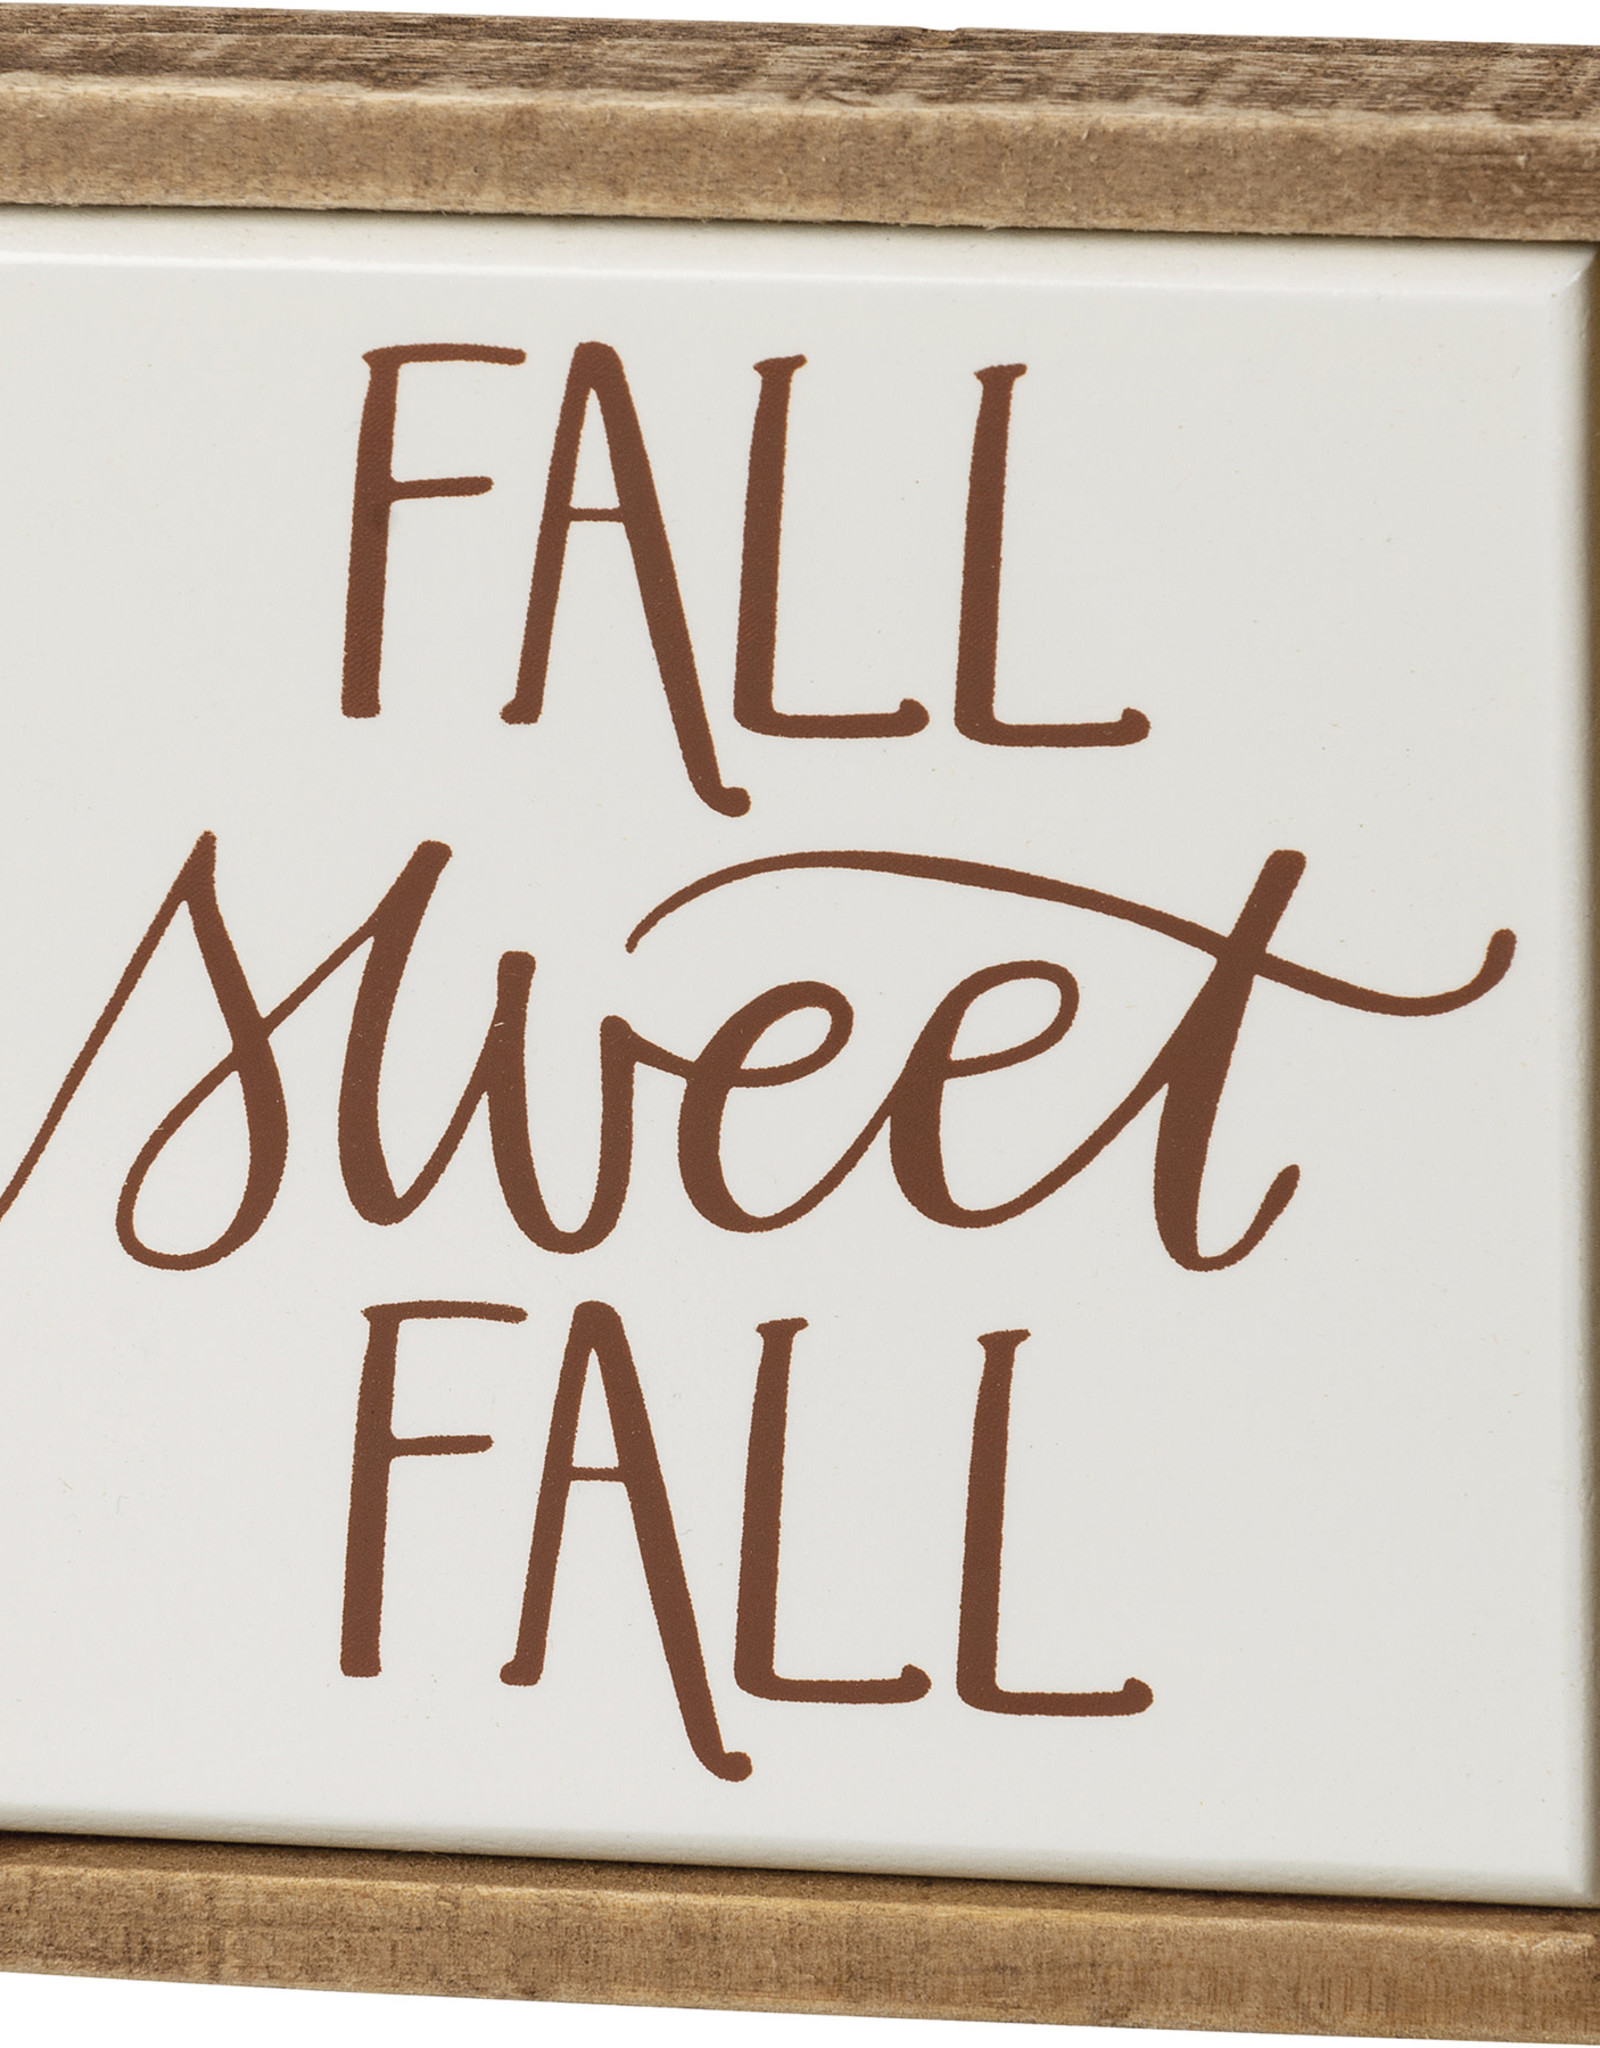 Box Sign Mini - Fall Sweet Fall